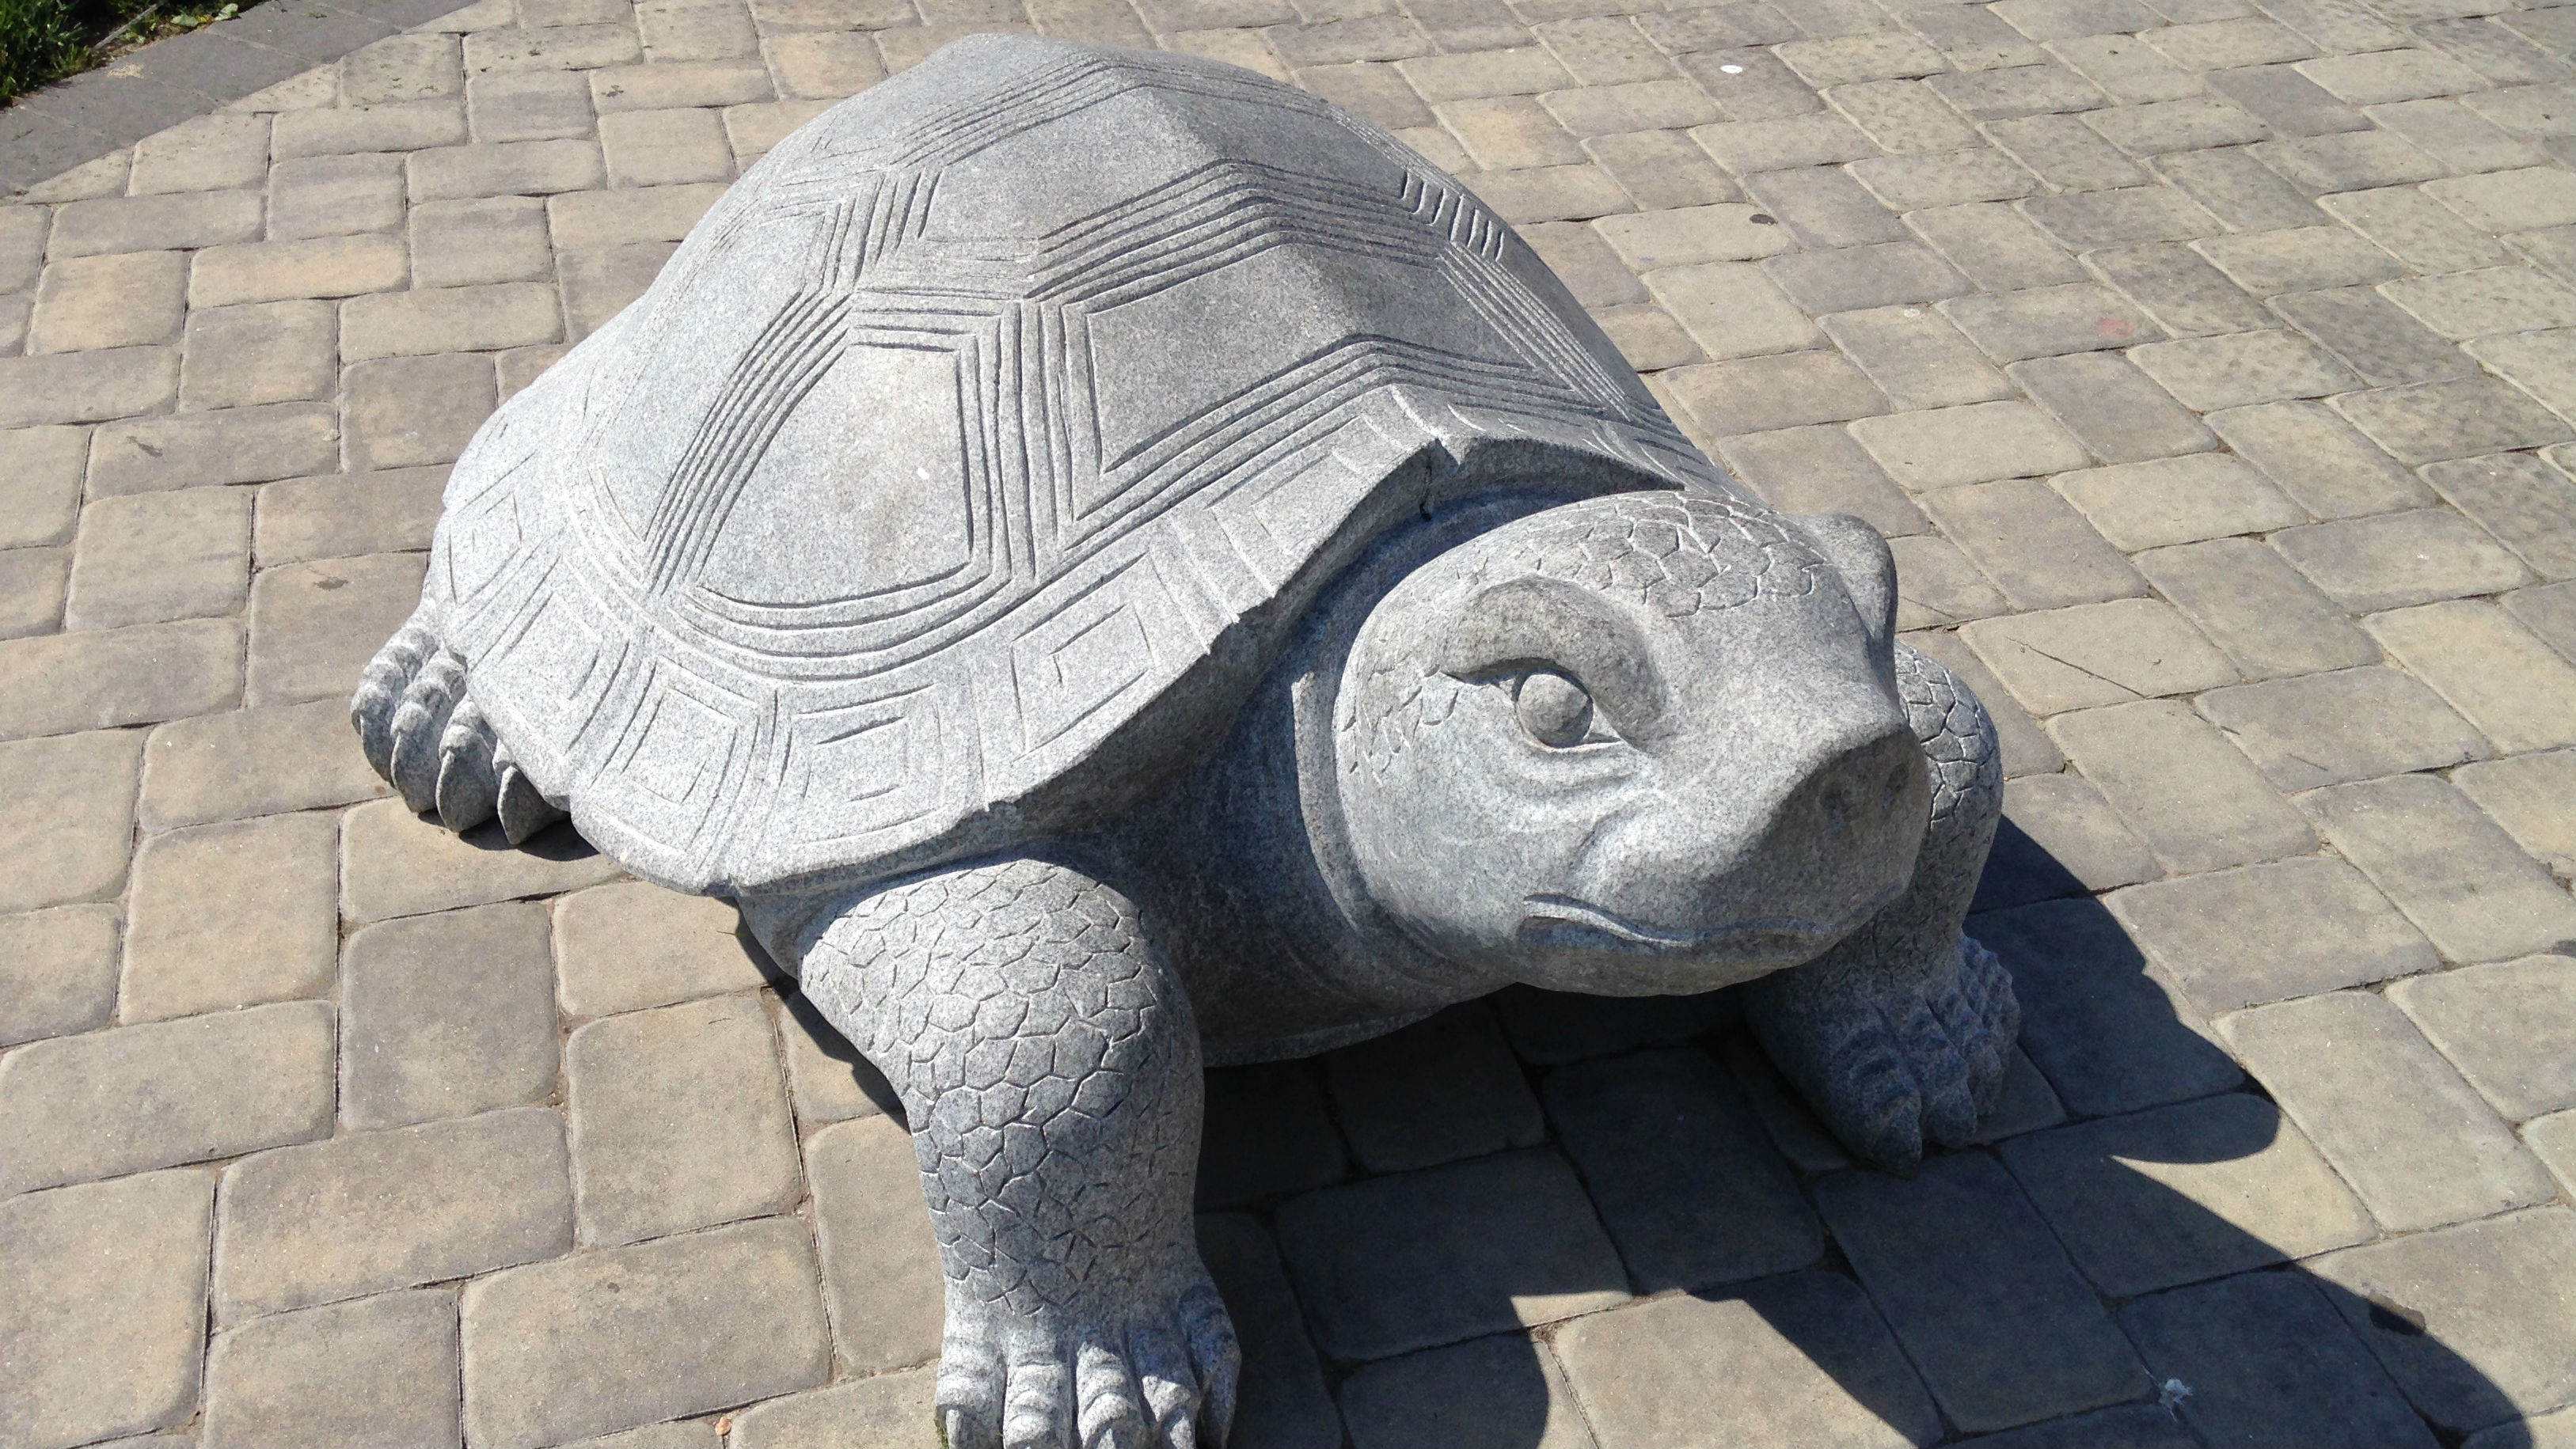 A statue of Sara the Turtle, Sea Isle City mascot. (Credit: Andrew Kramer)